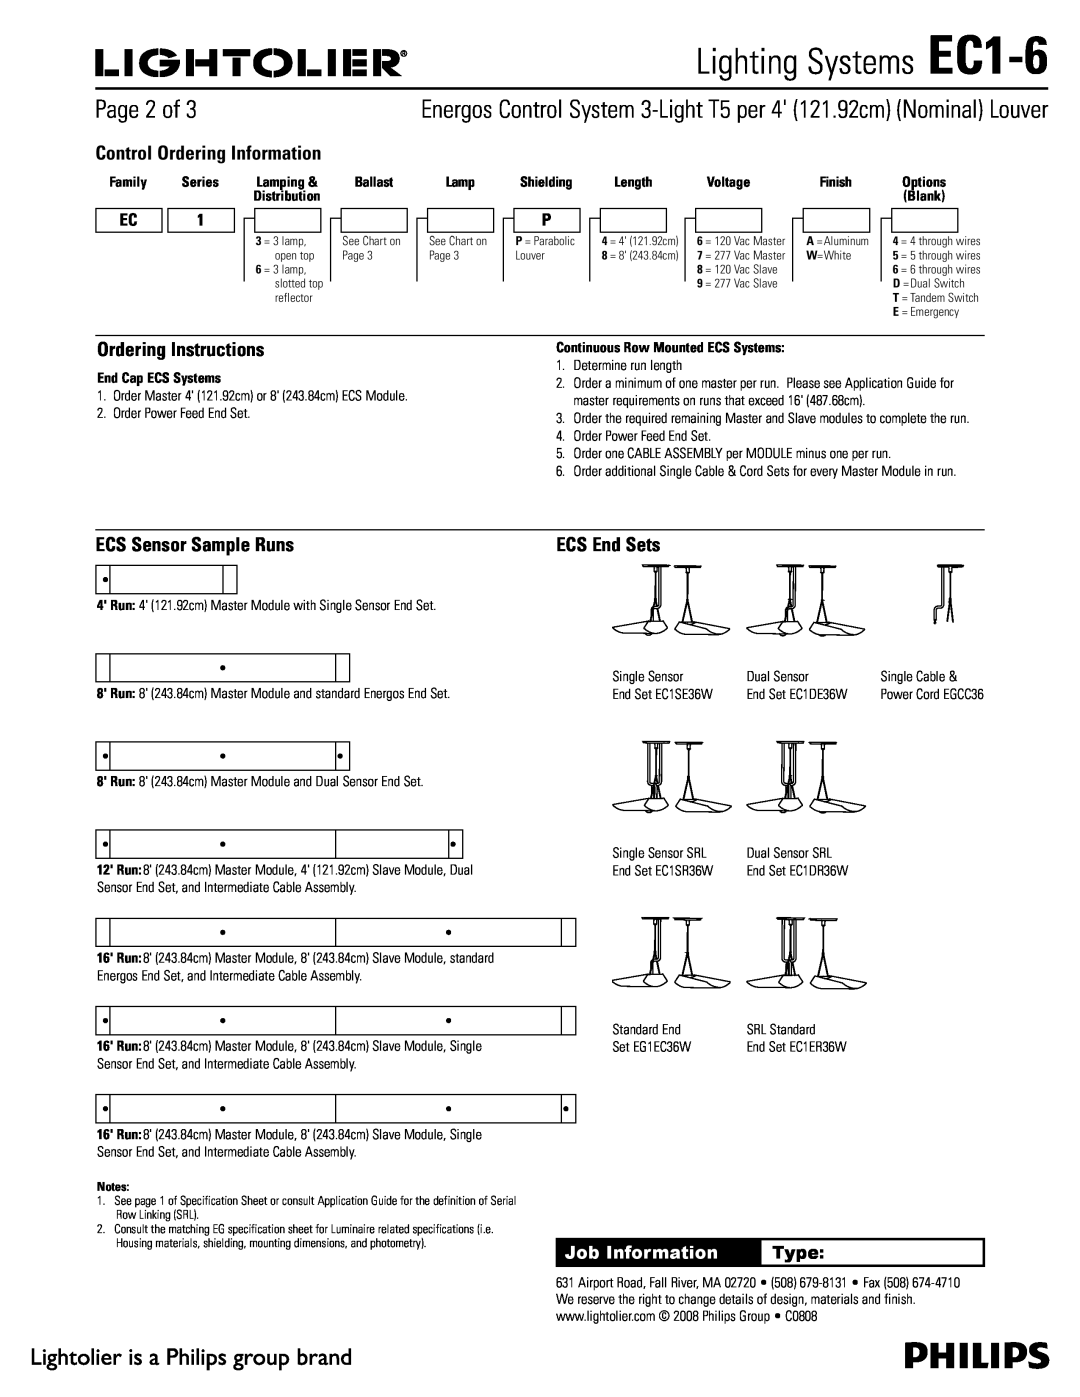 Lightolier EC1-6 Page 2 of, Control Ordering Information, Ordering Instructions, ECS Sensor Sample Runs, Type 